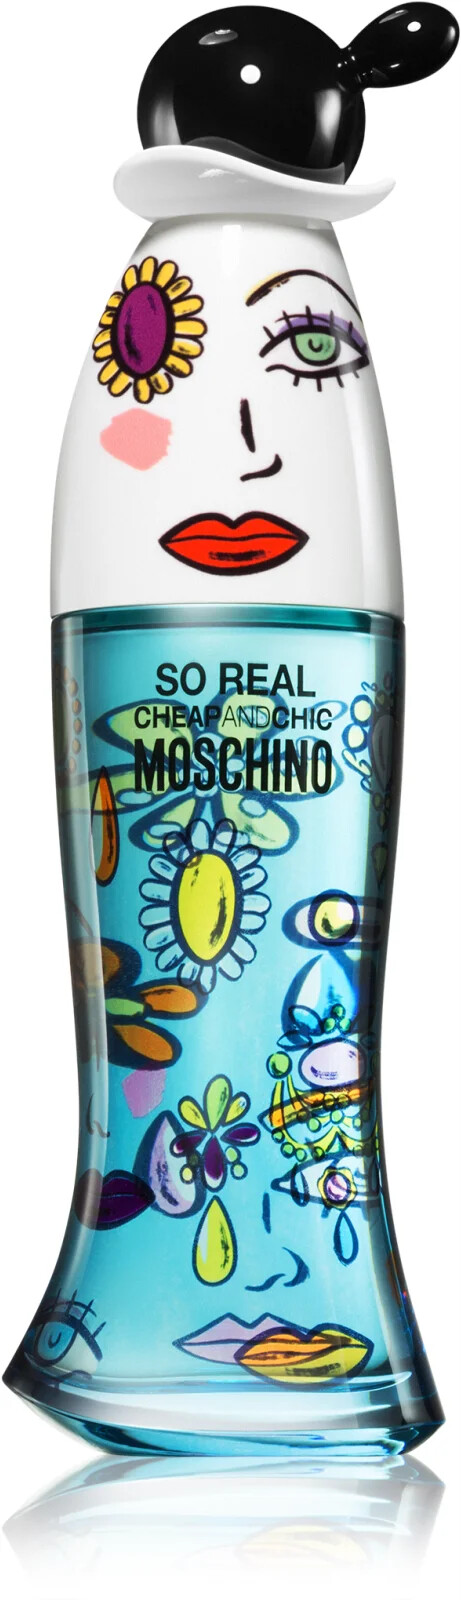 Moschino Cheap and Chic So Real toaletní voda pro ženy 100 ml tester